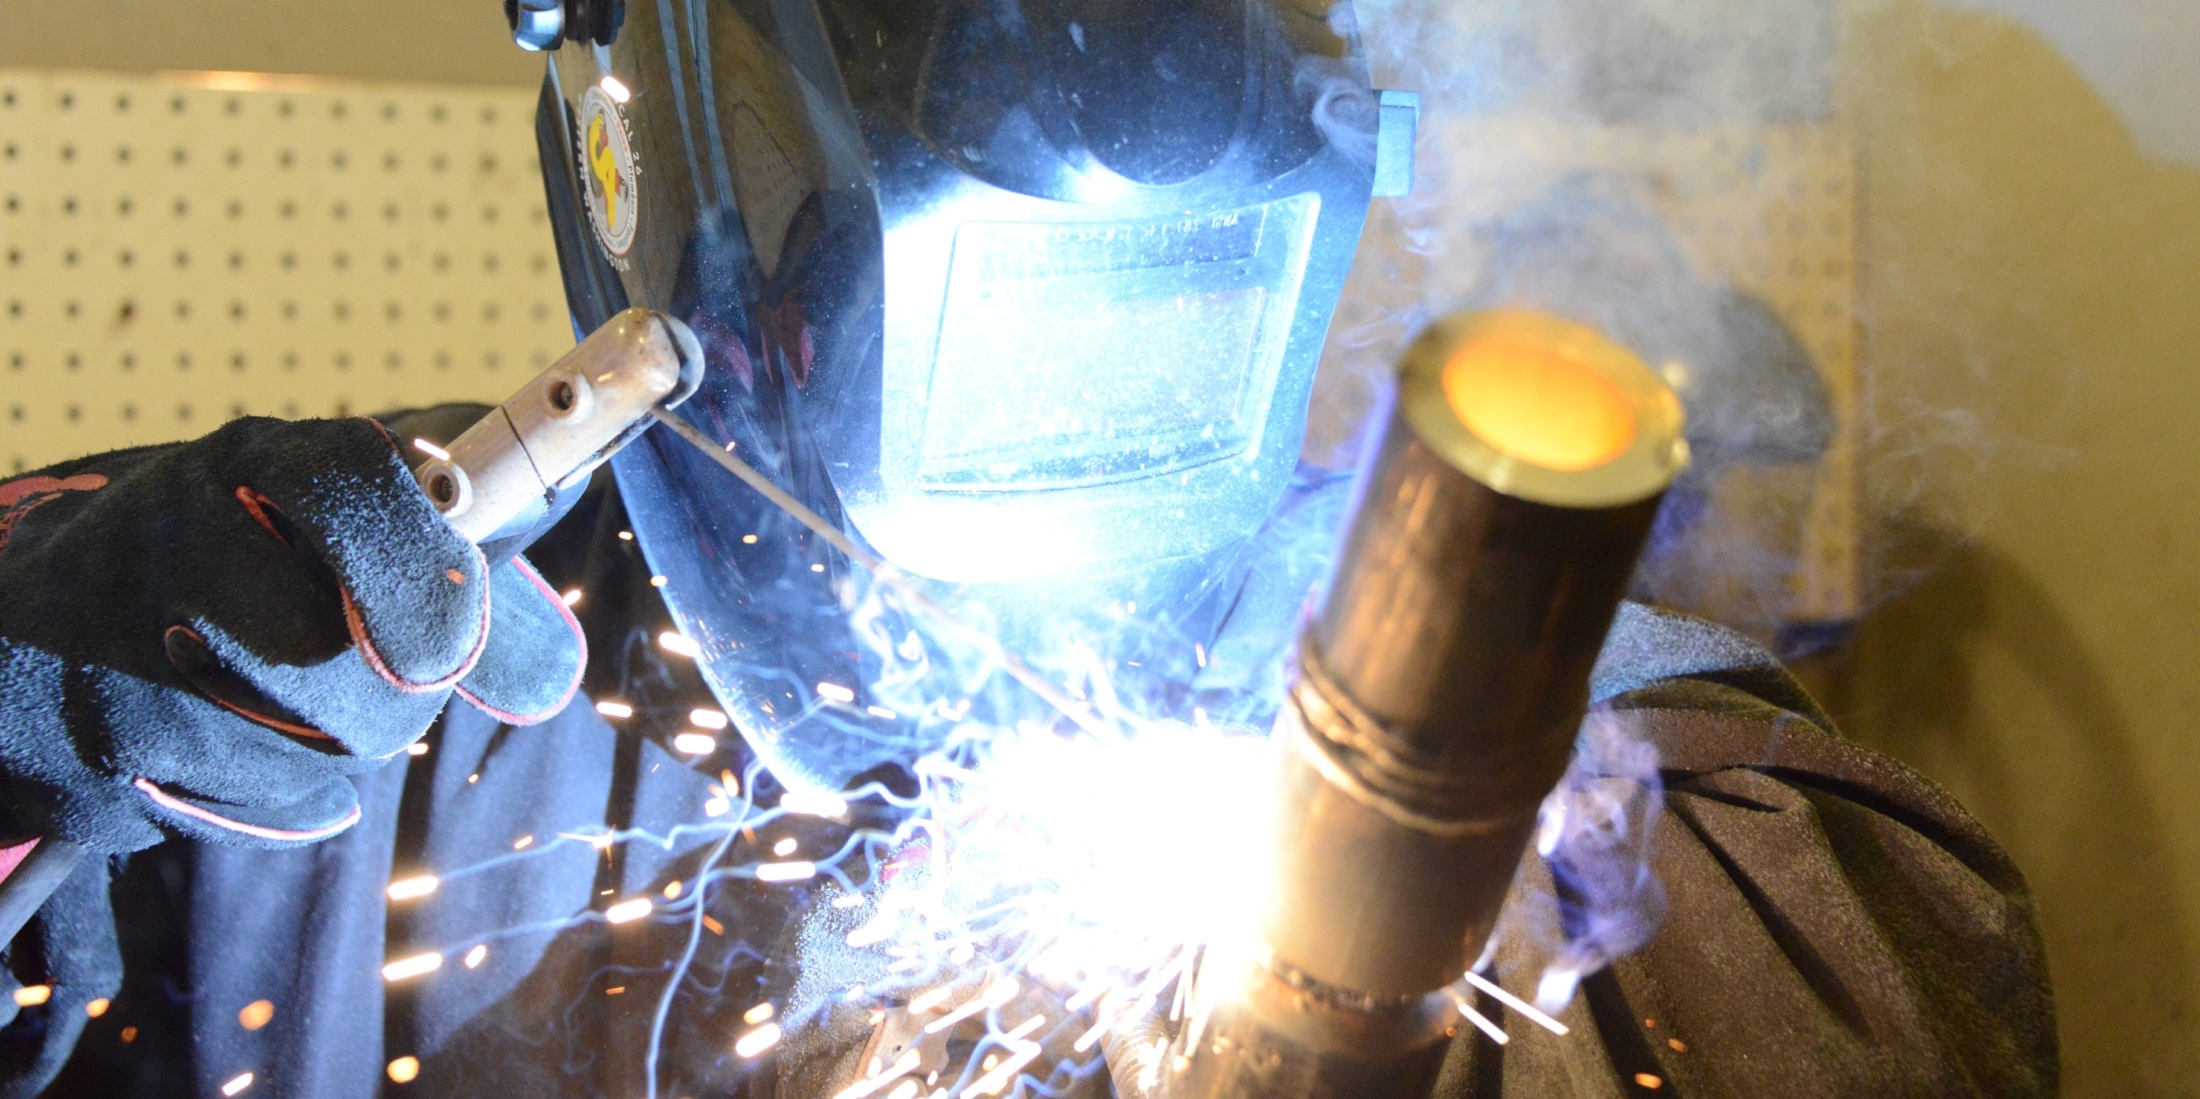 UA VIP Fort Campbell graduates will begin civilian welding careers